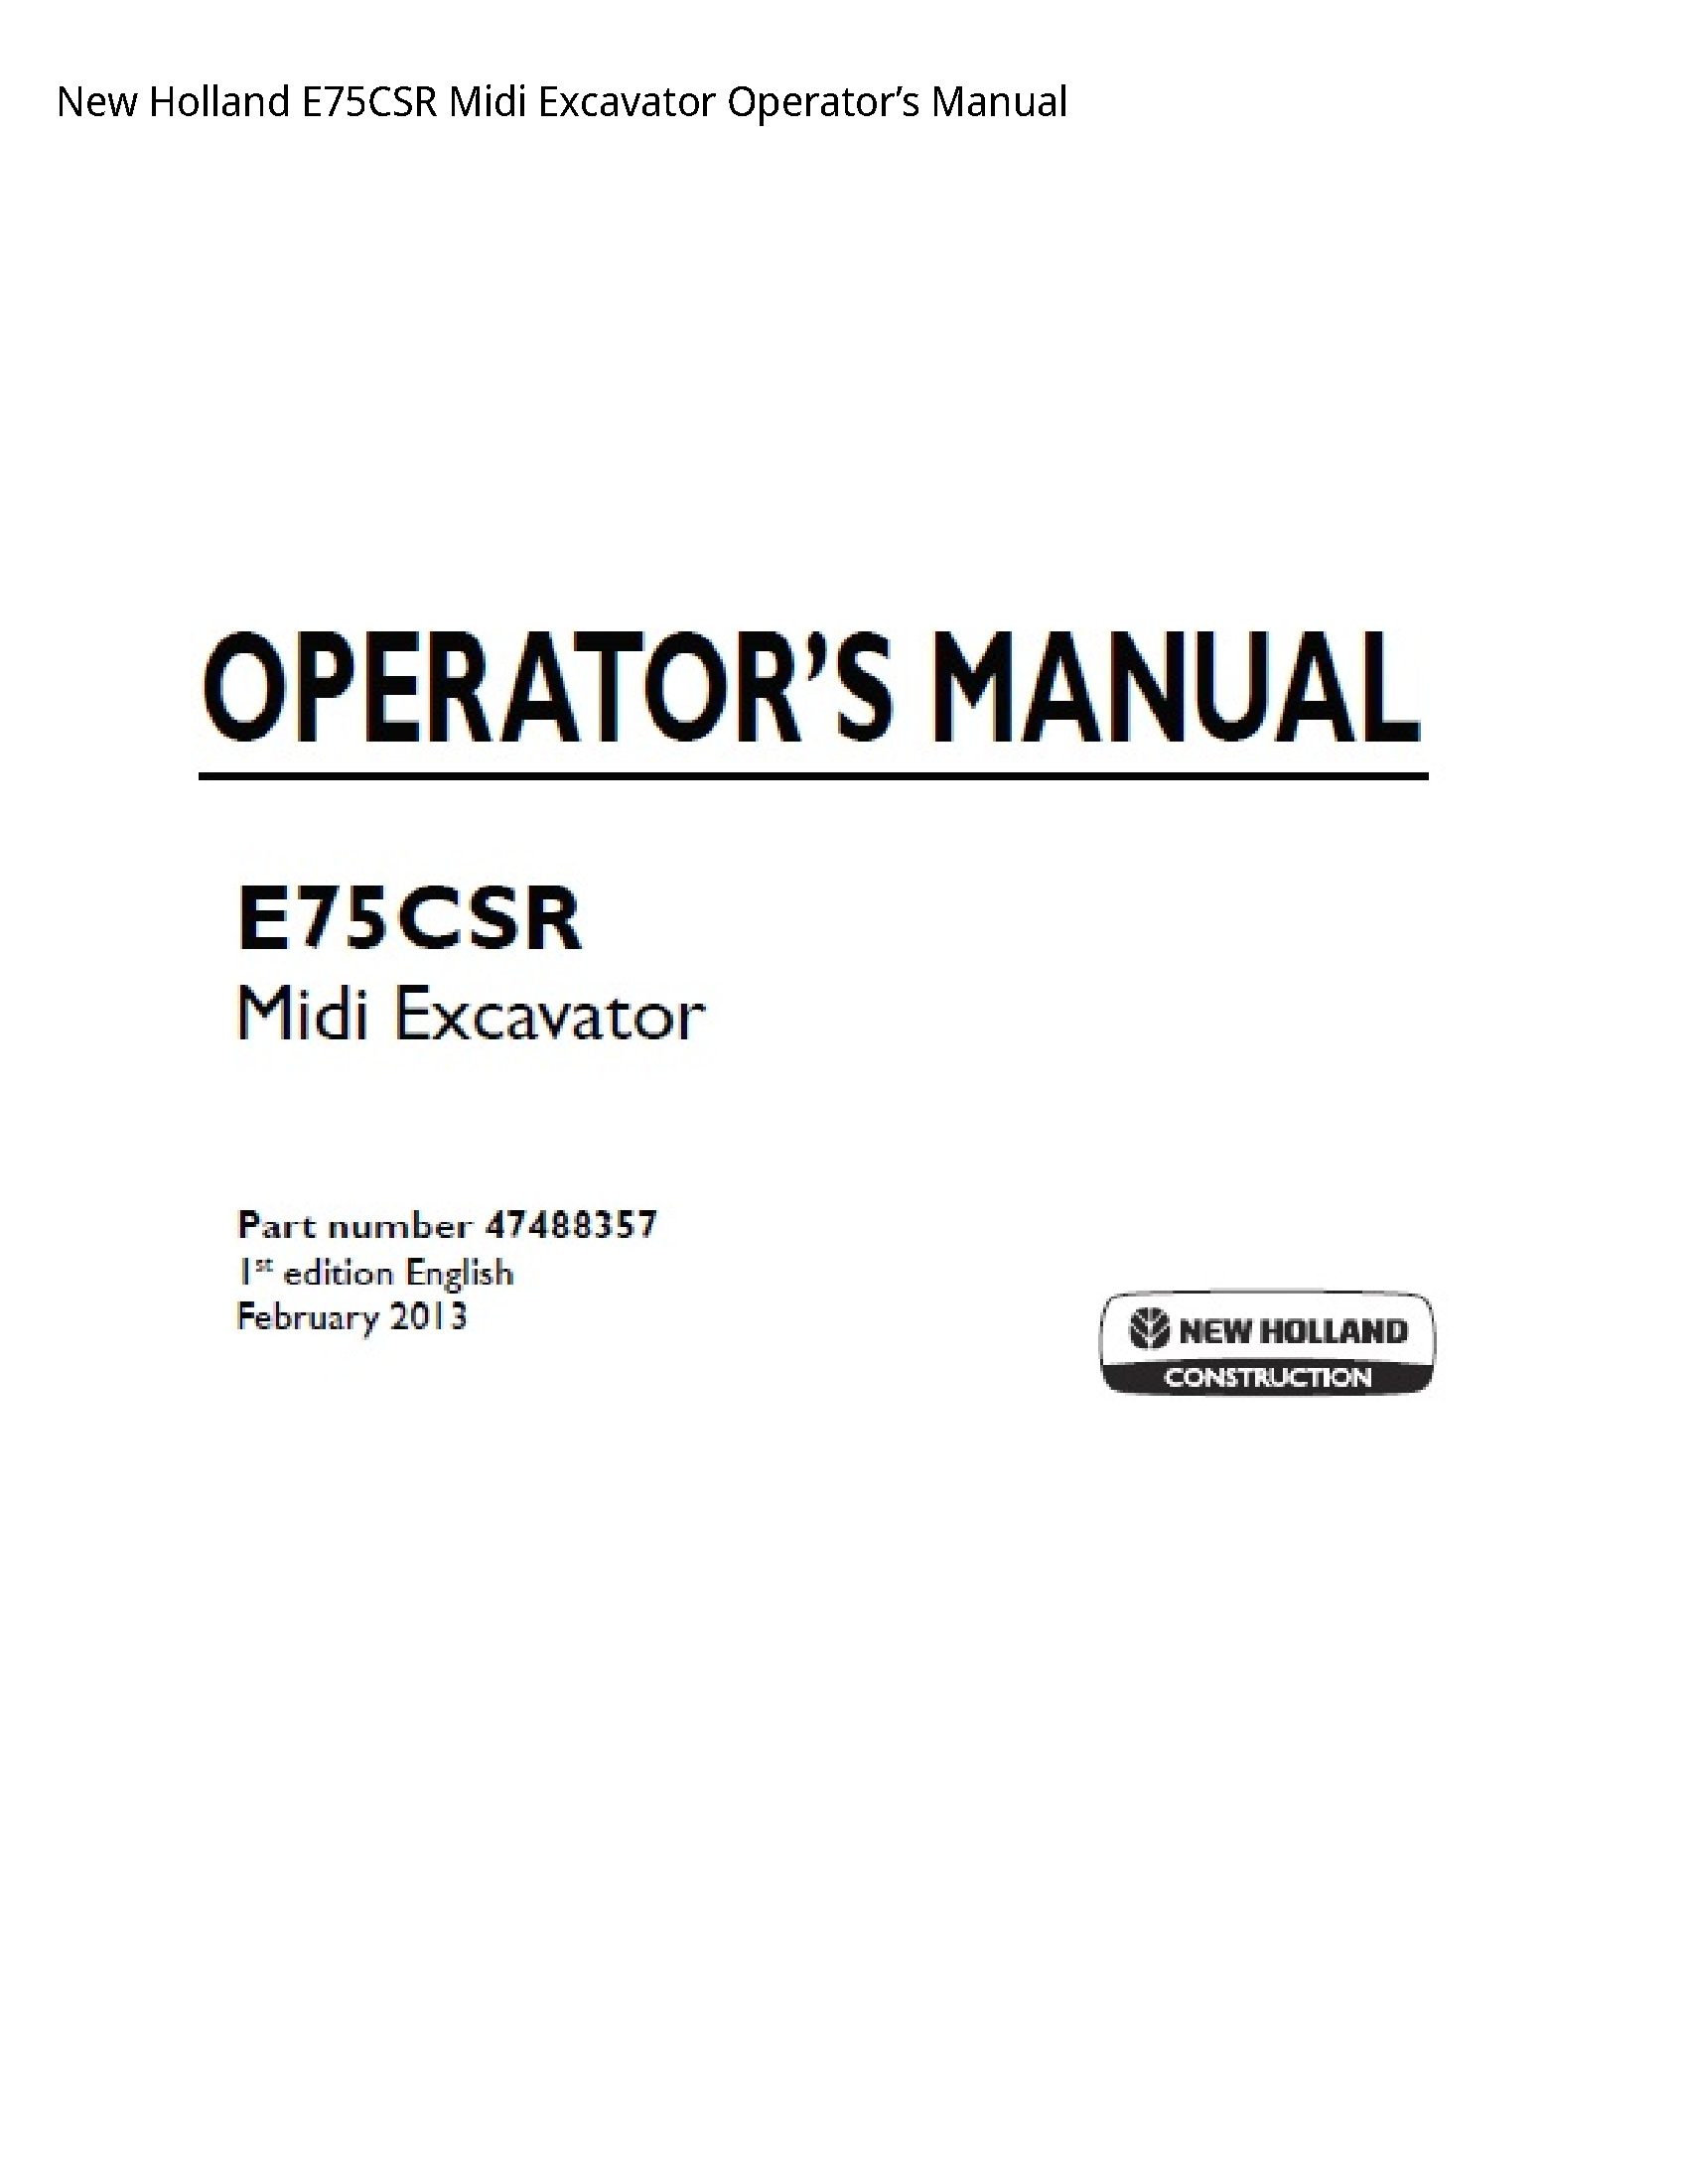 New Holland E75CSR Midi Excavator Operator’s manual